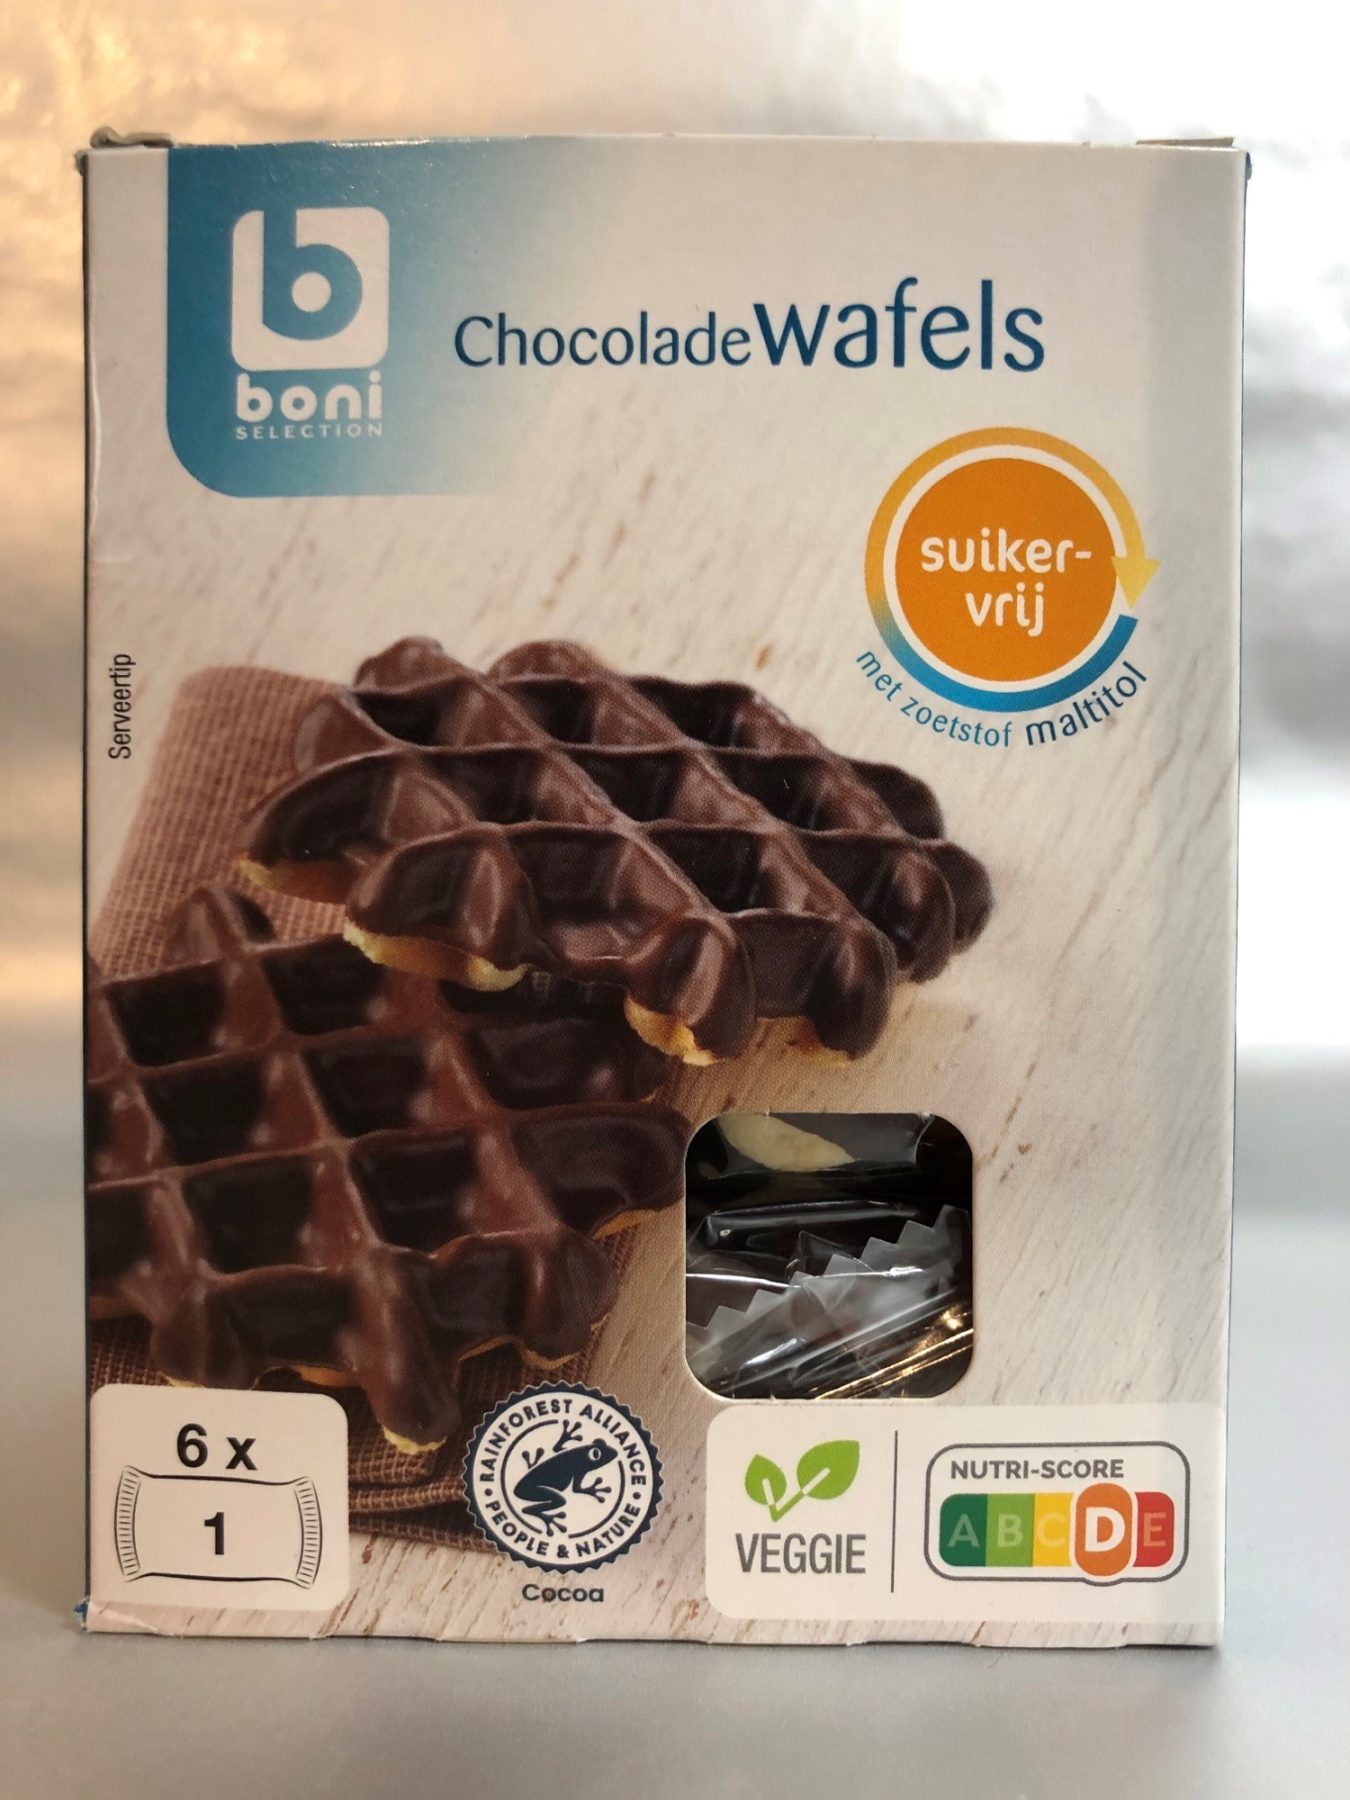 Boni sugar free waffles with Belgian chocolate